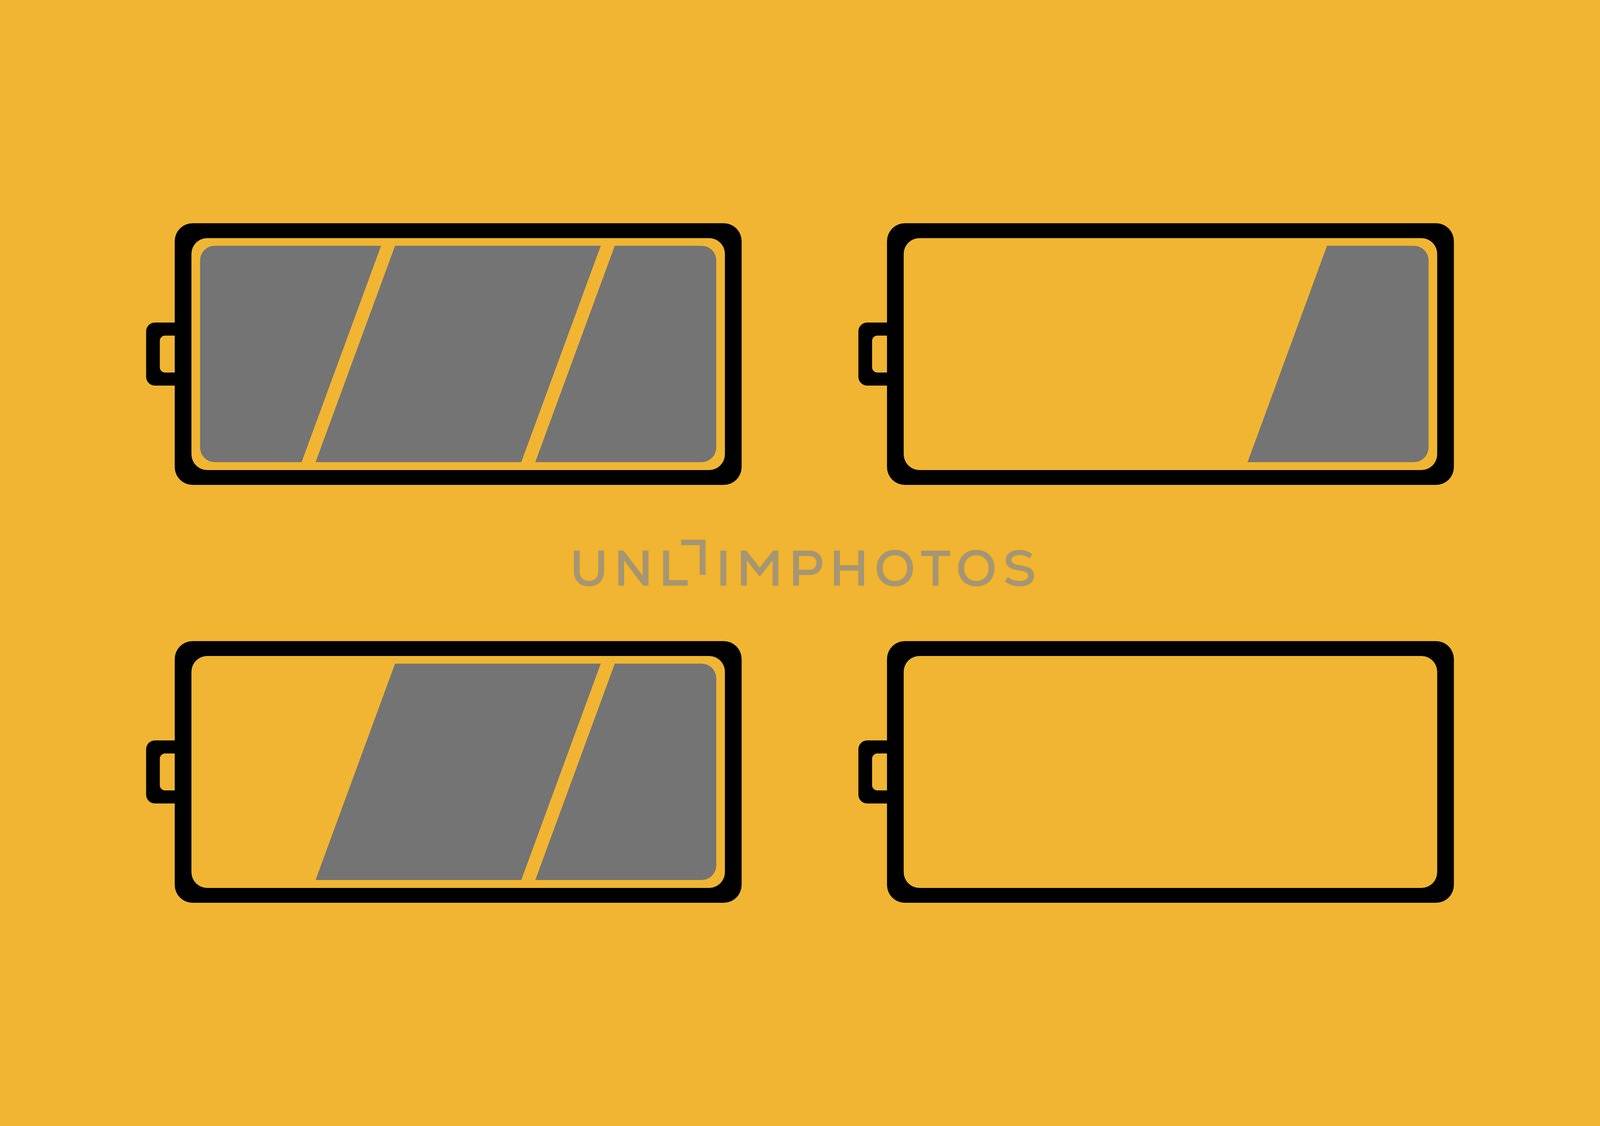 illustration showing different battery level symbols